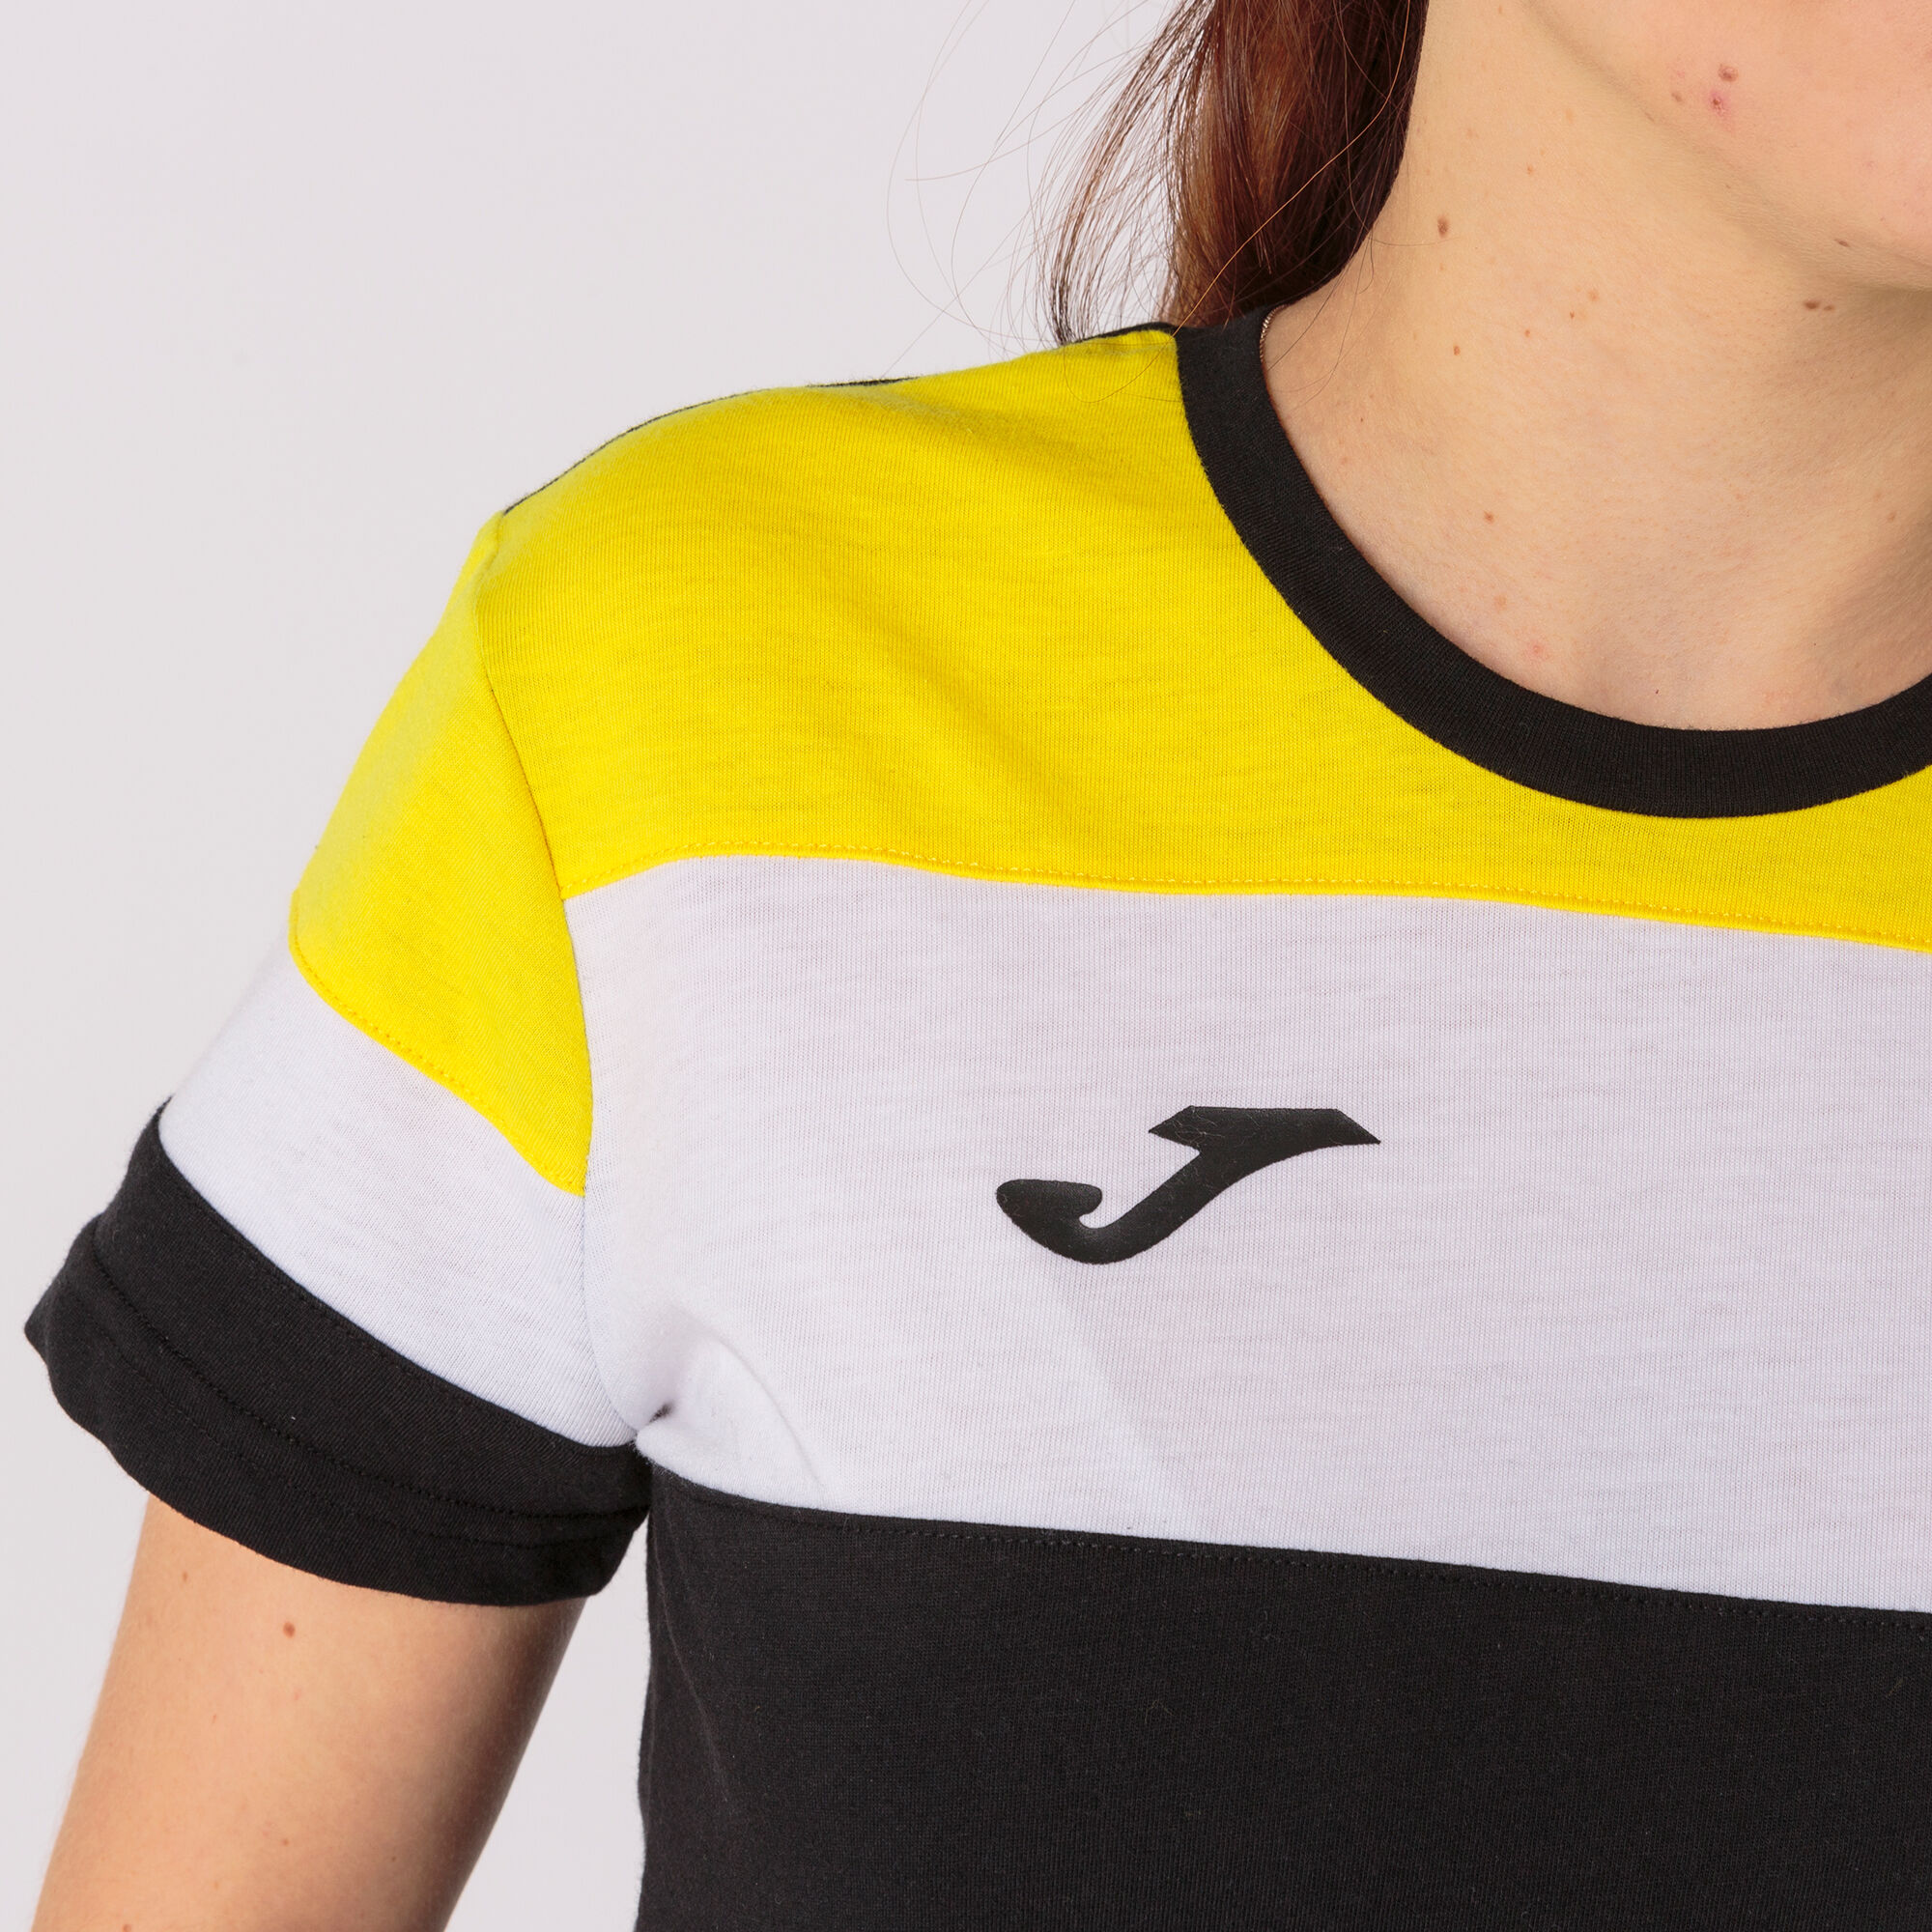 Camiseta manga corta mujer Crew IV negro amarillo blanco